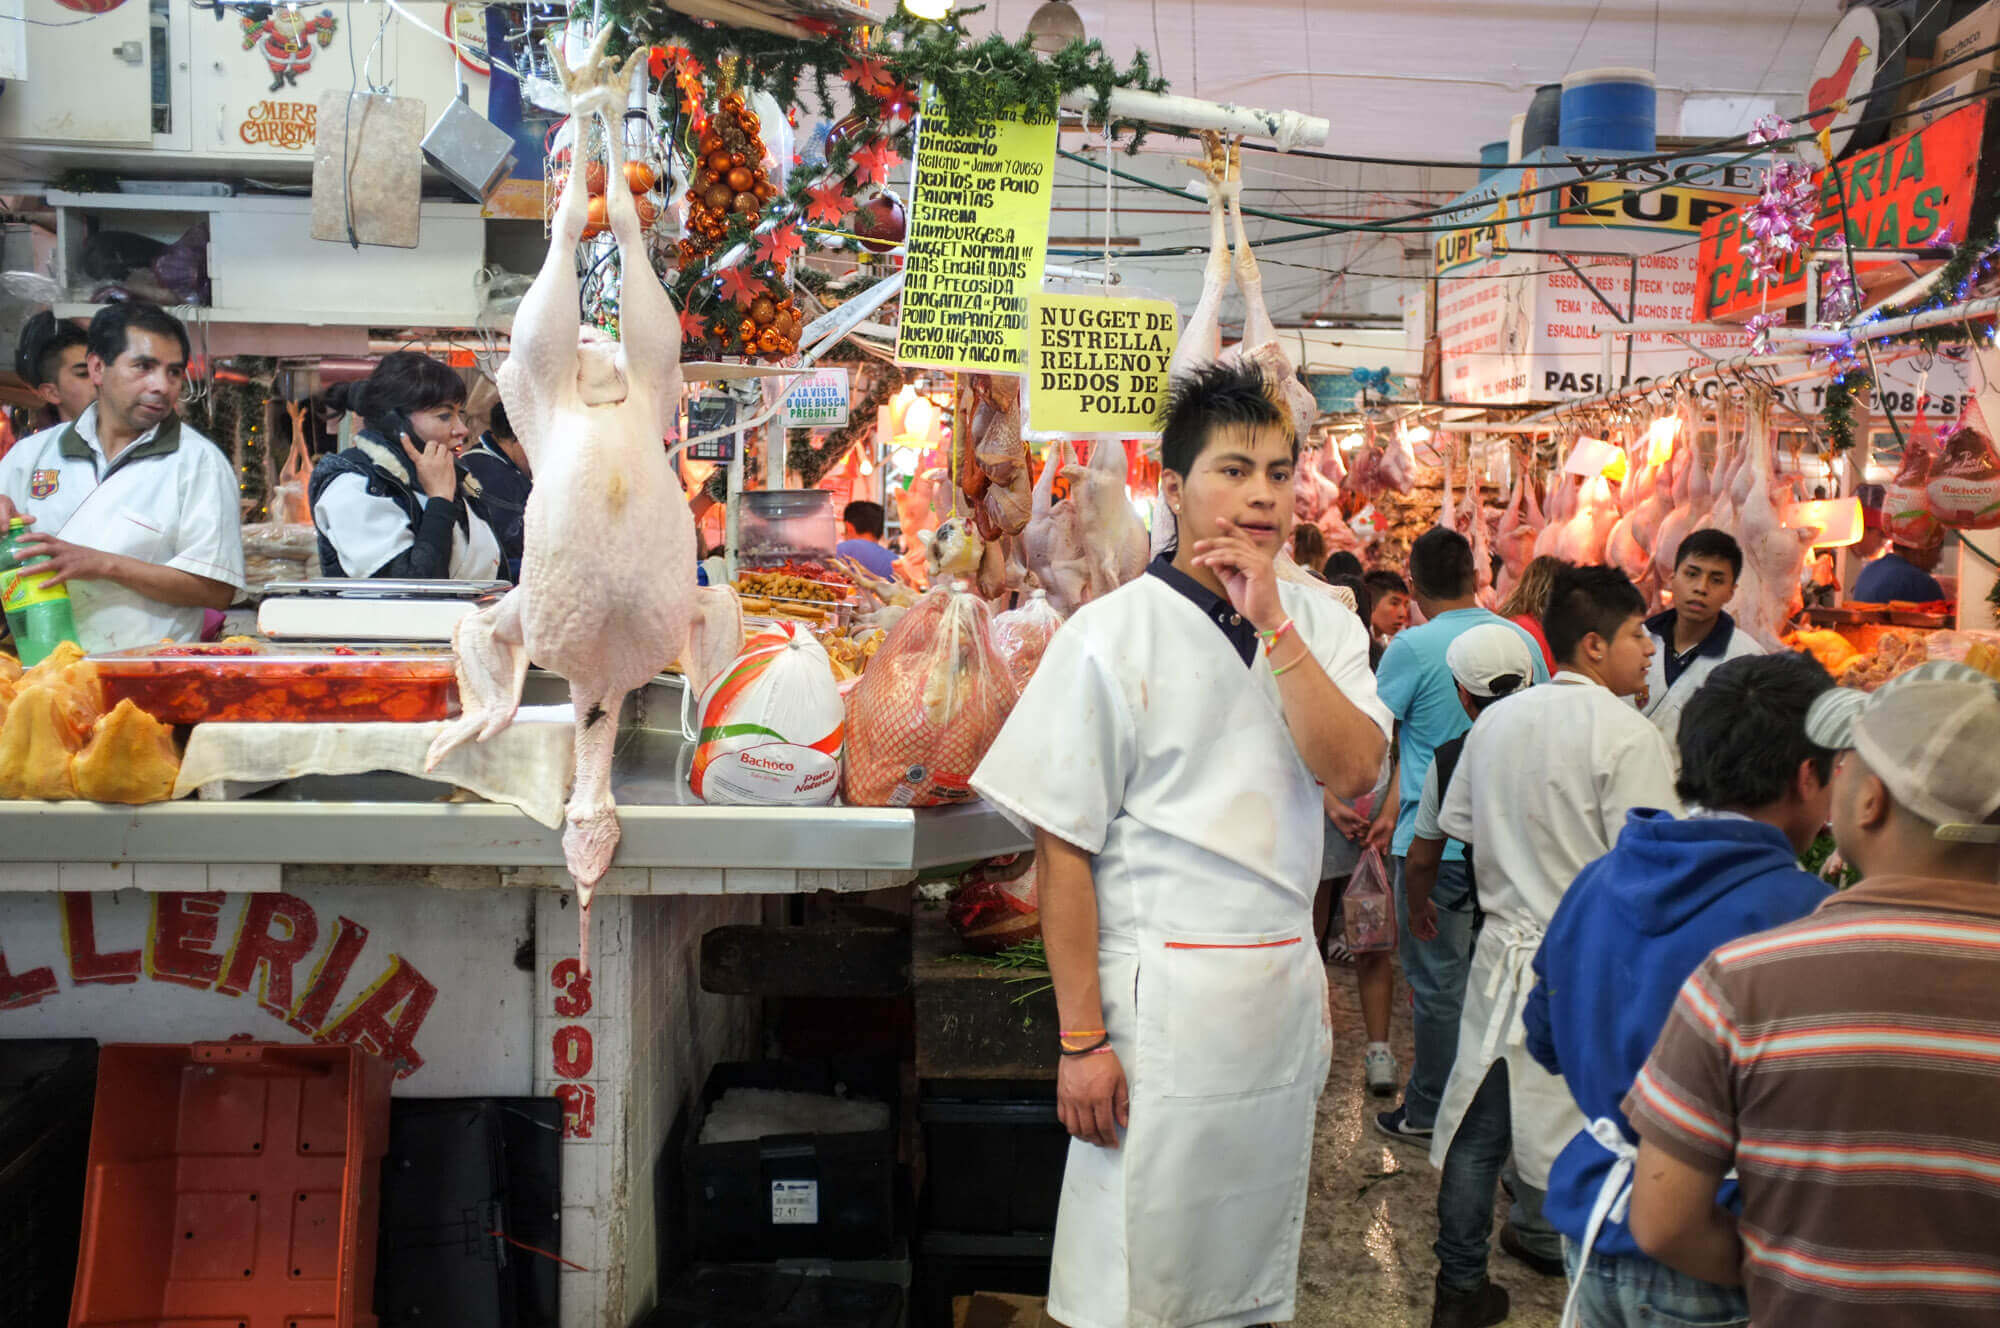 The meat market at La Merced